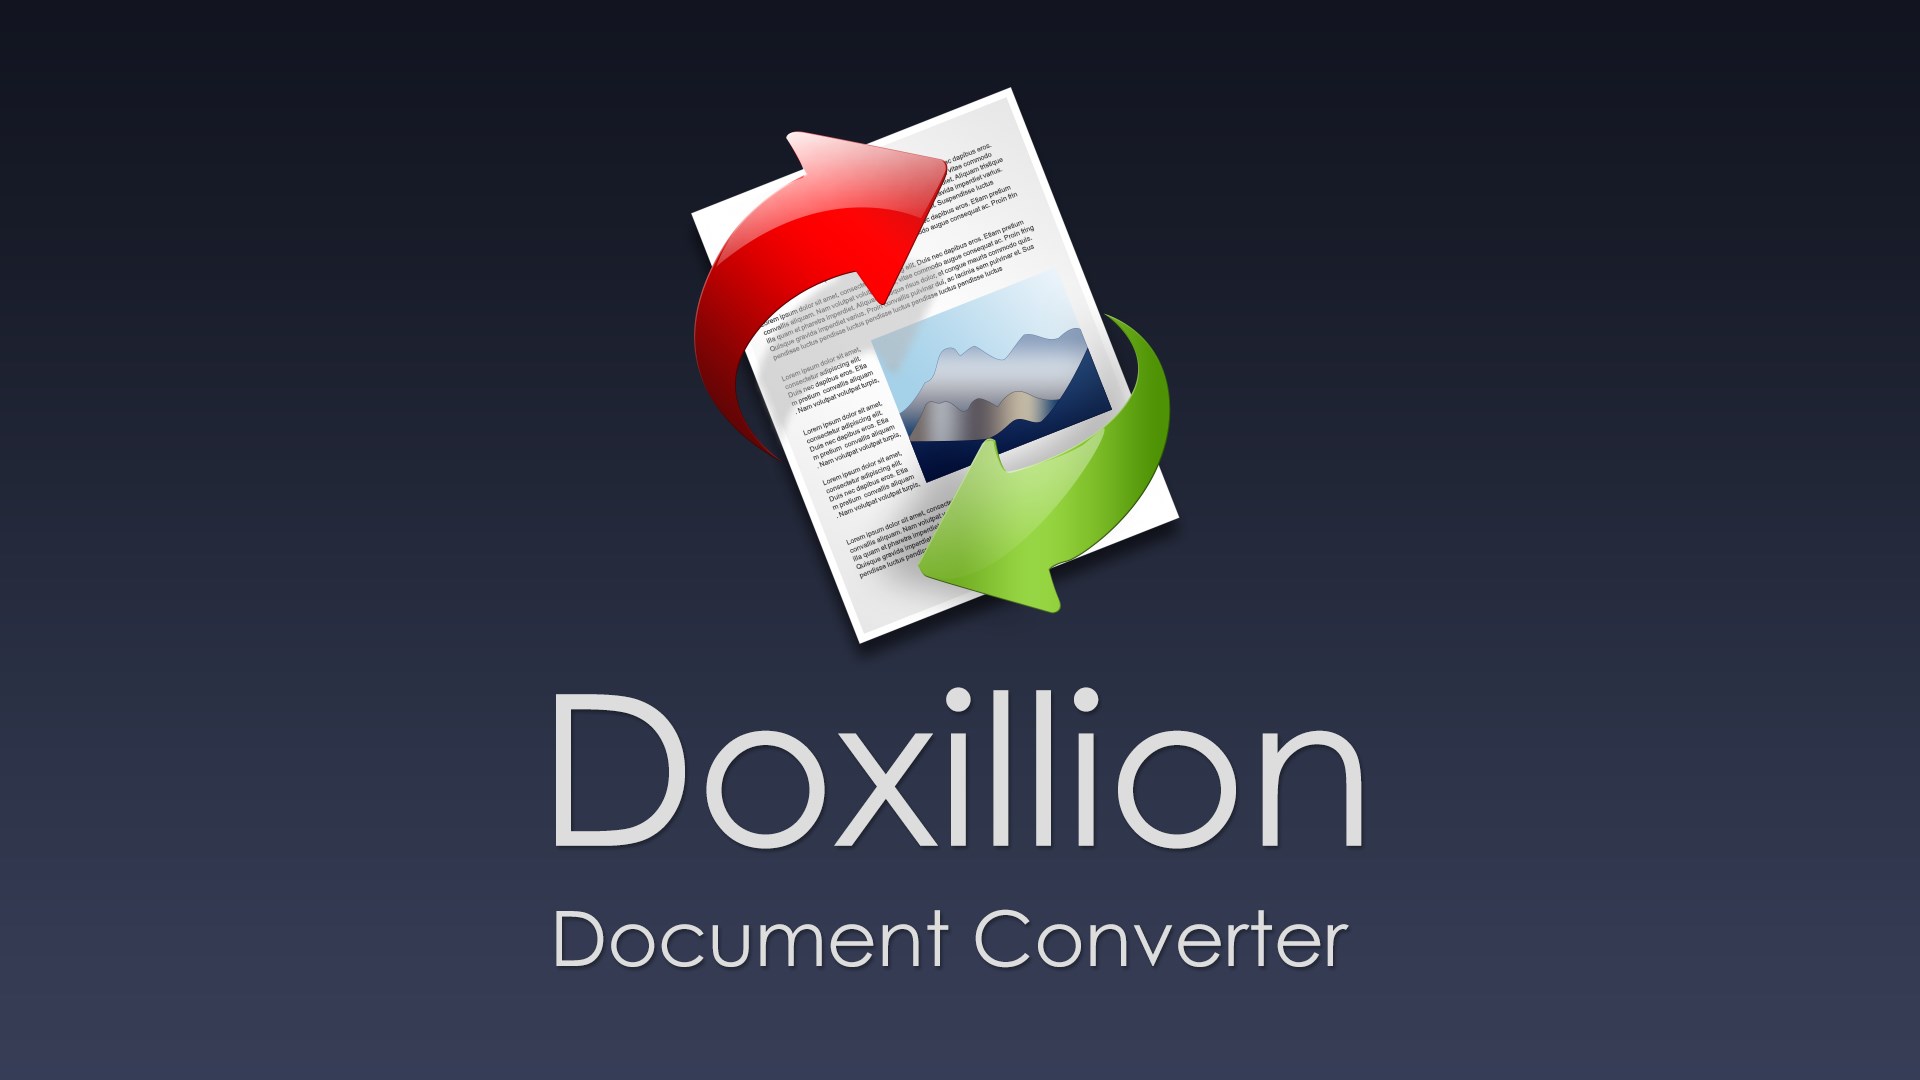 NCH: Doxillion Document Converter Key 100.57 USD